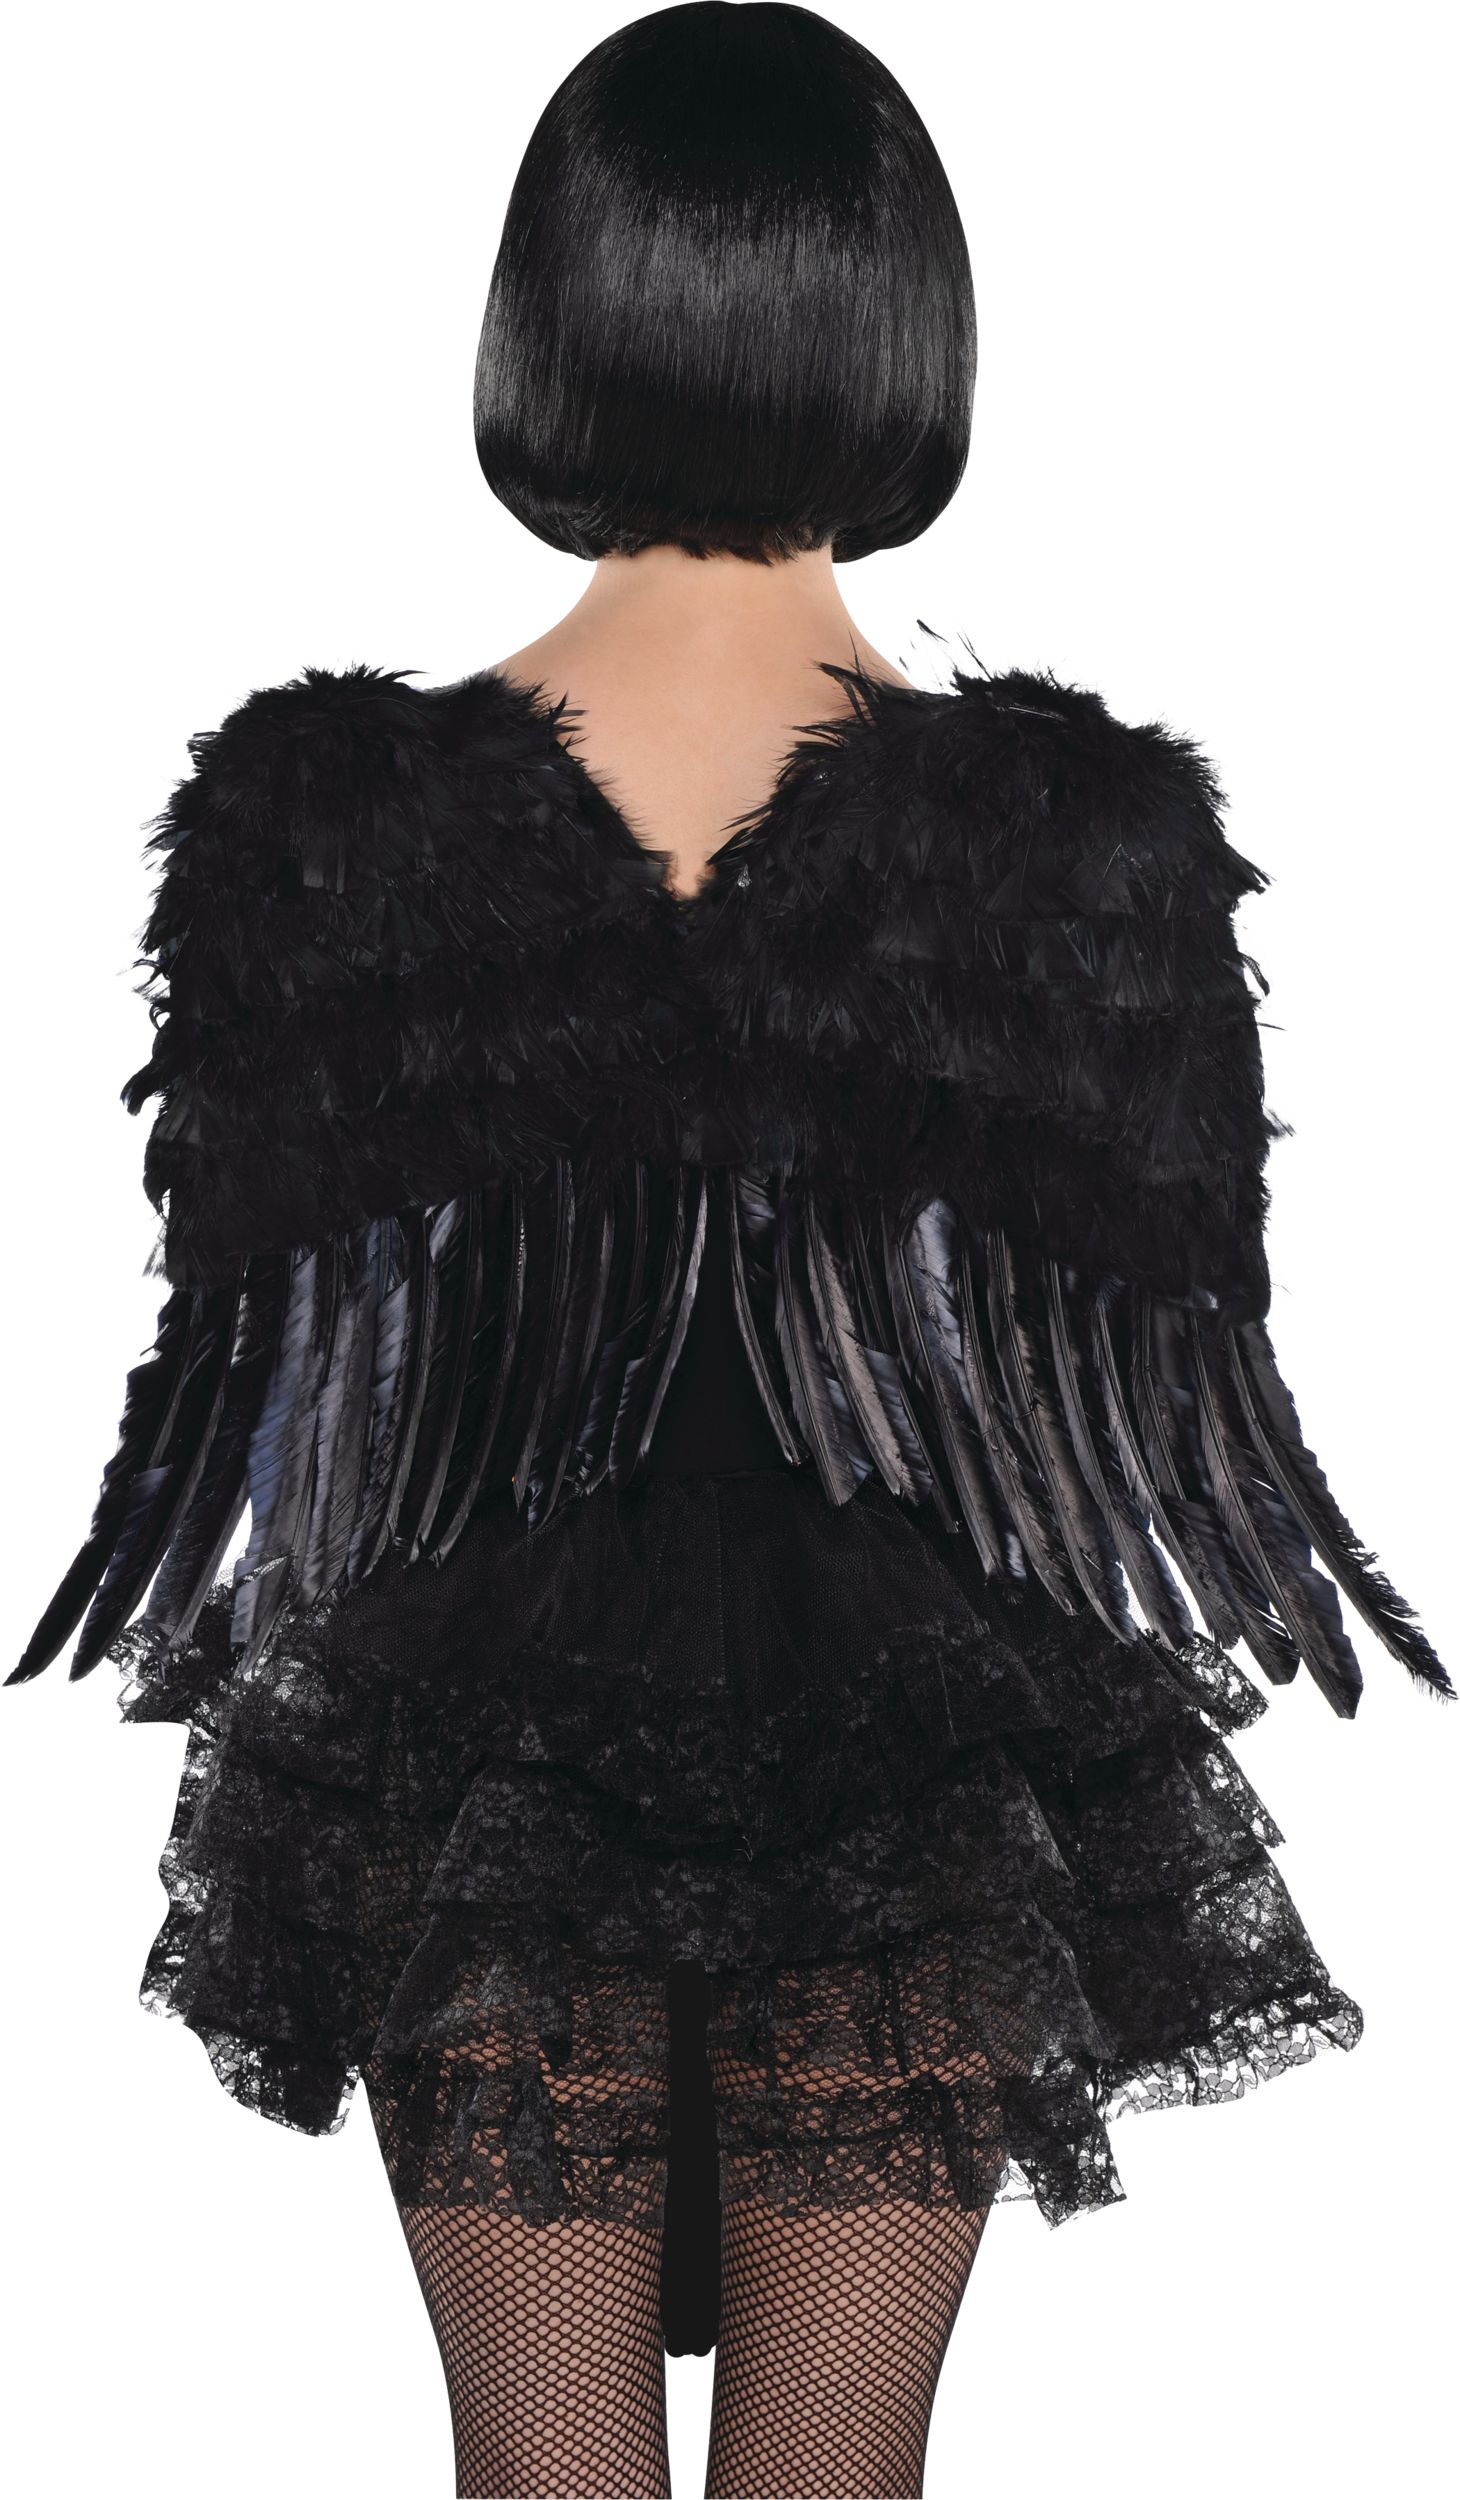 Dark Fallen Angel Feather Wings Downturned, Black, One Size, Wearable  Costume Accessory for Halloween